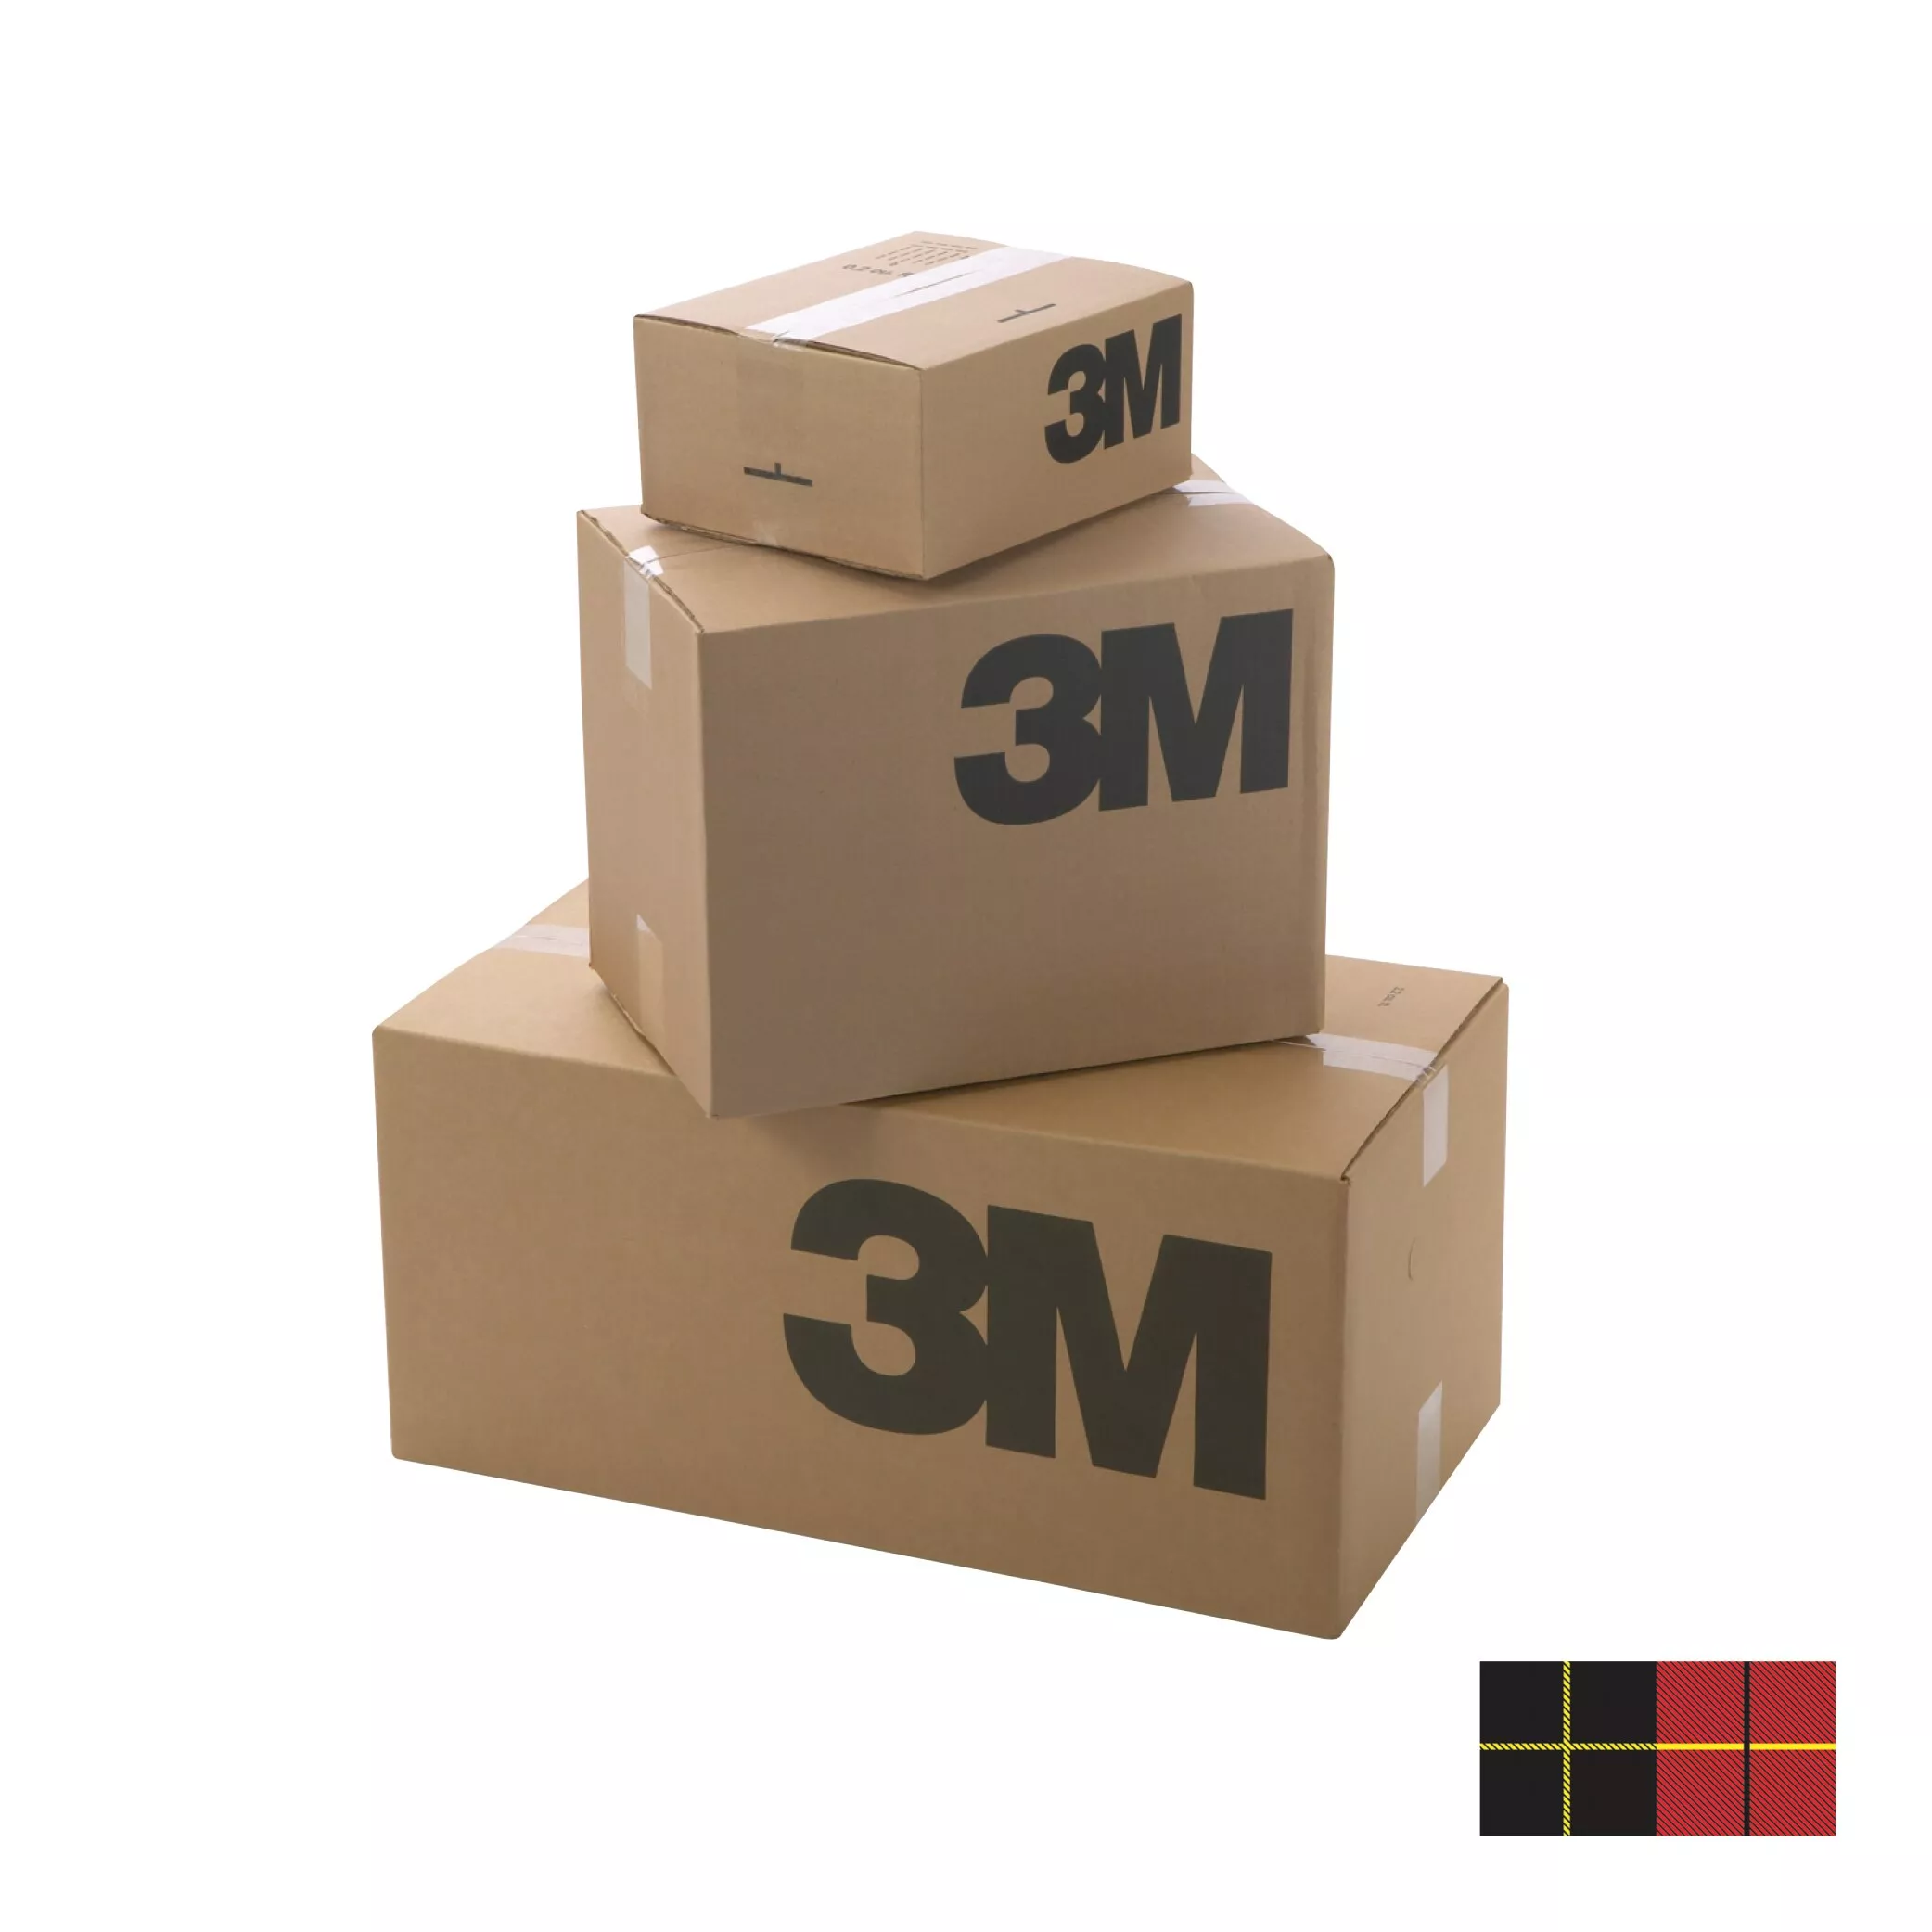 SKU 7100288301 | Scotch® High Tack Box Sealing Tape 371+